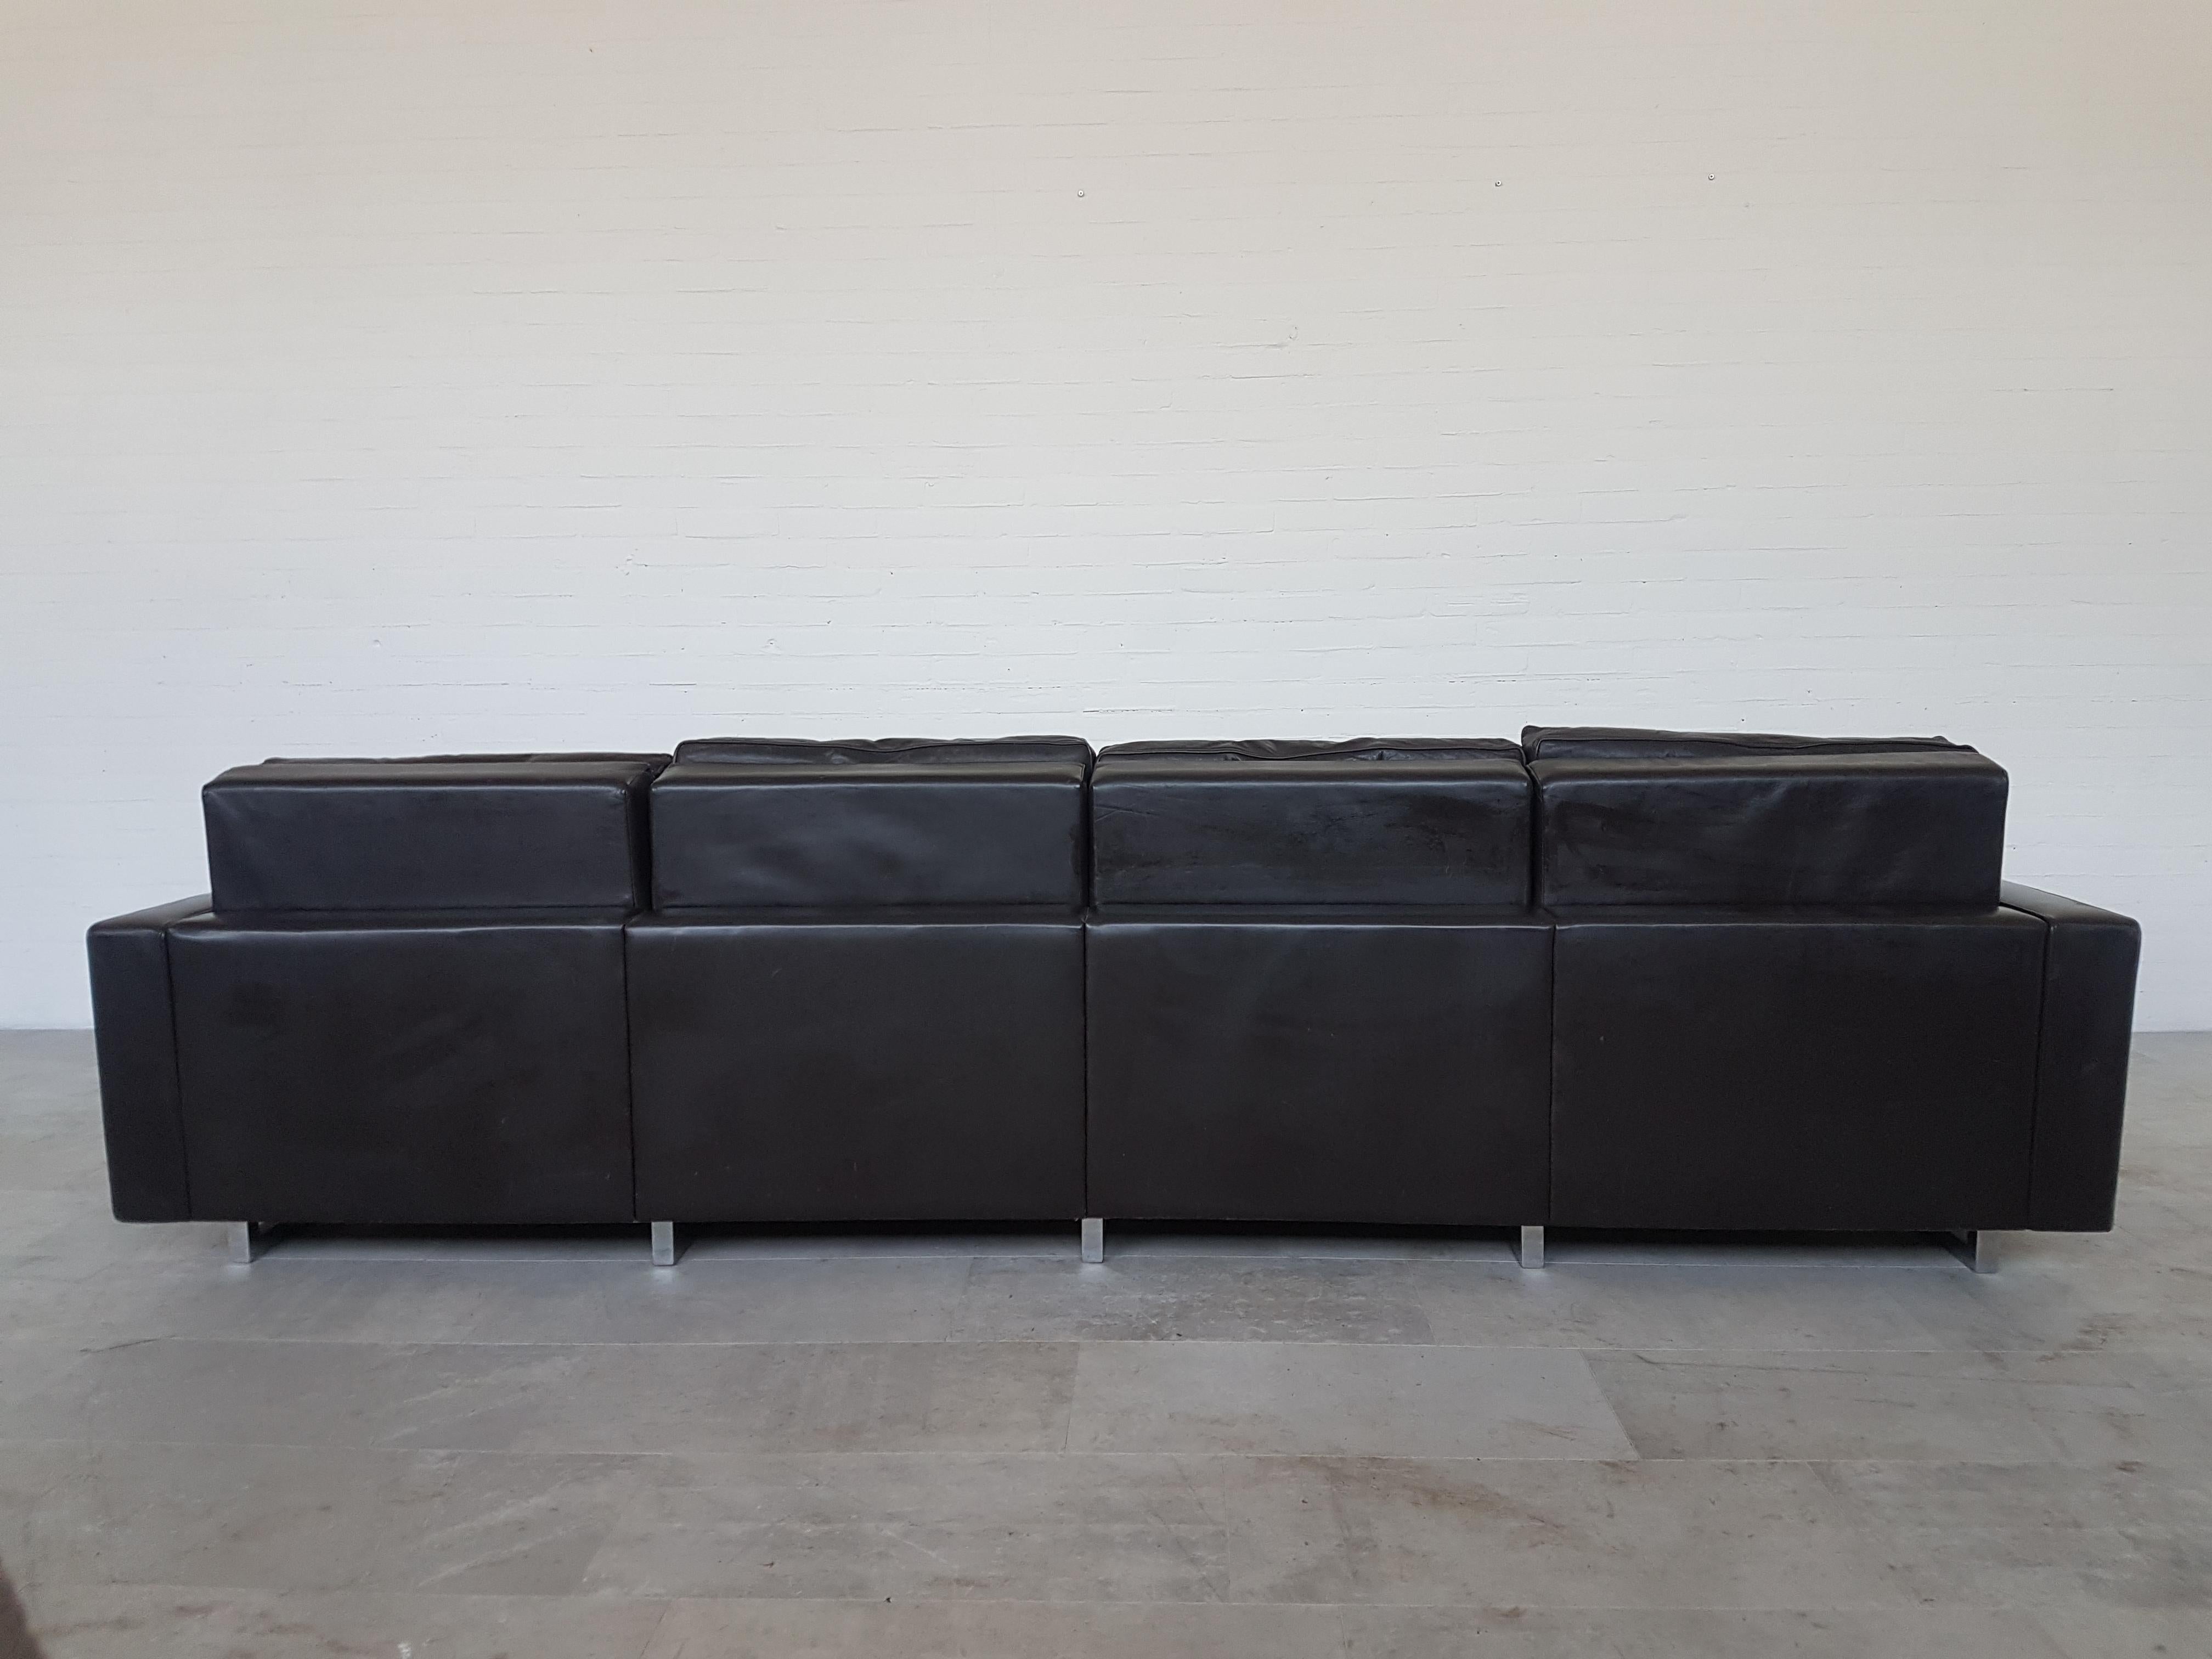 Swiss De Sede New York Vintage Four-Seat Sofa in Dark Brown Leather